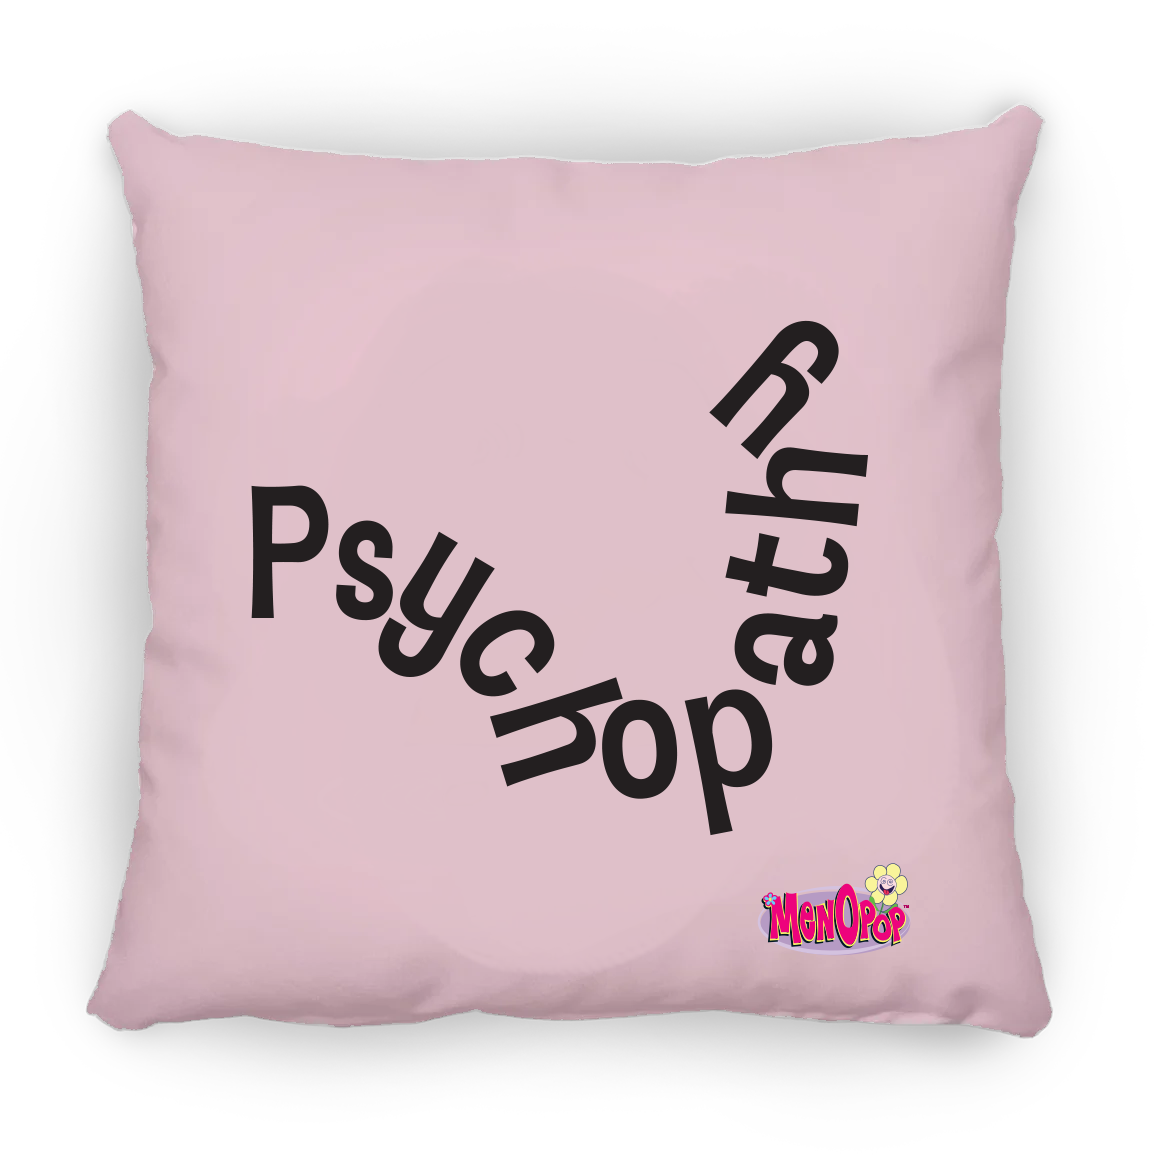 MOOD Pillow: PYSCHOPATHY KATHY